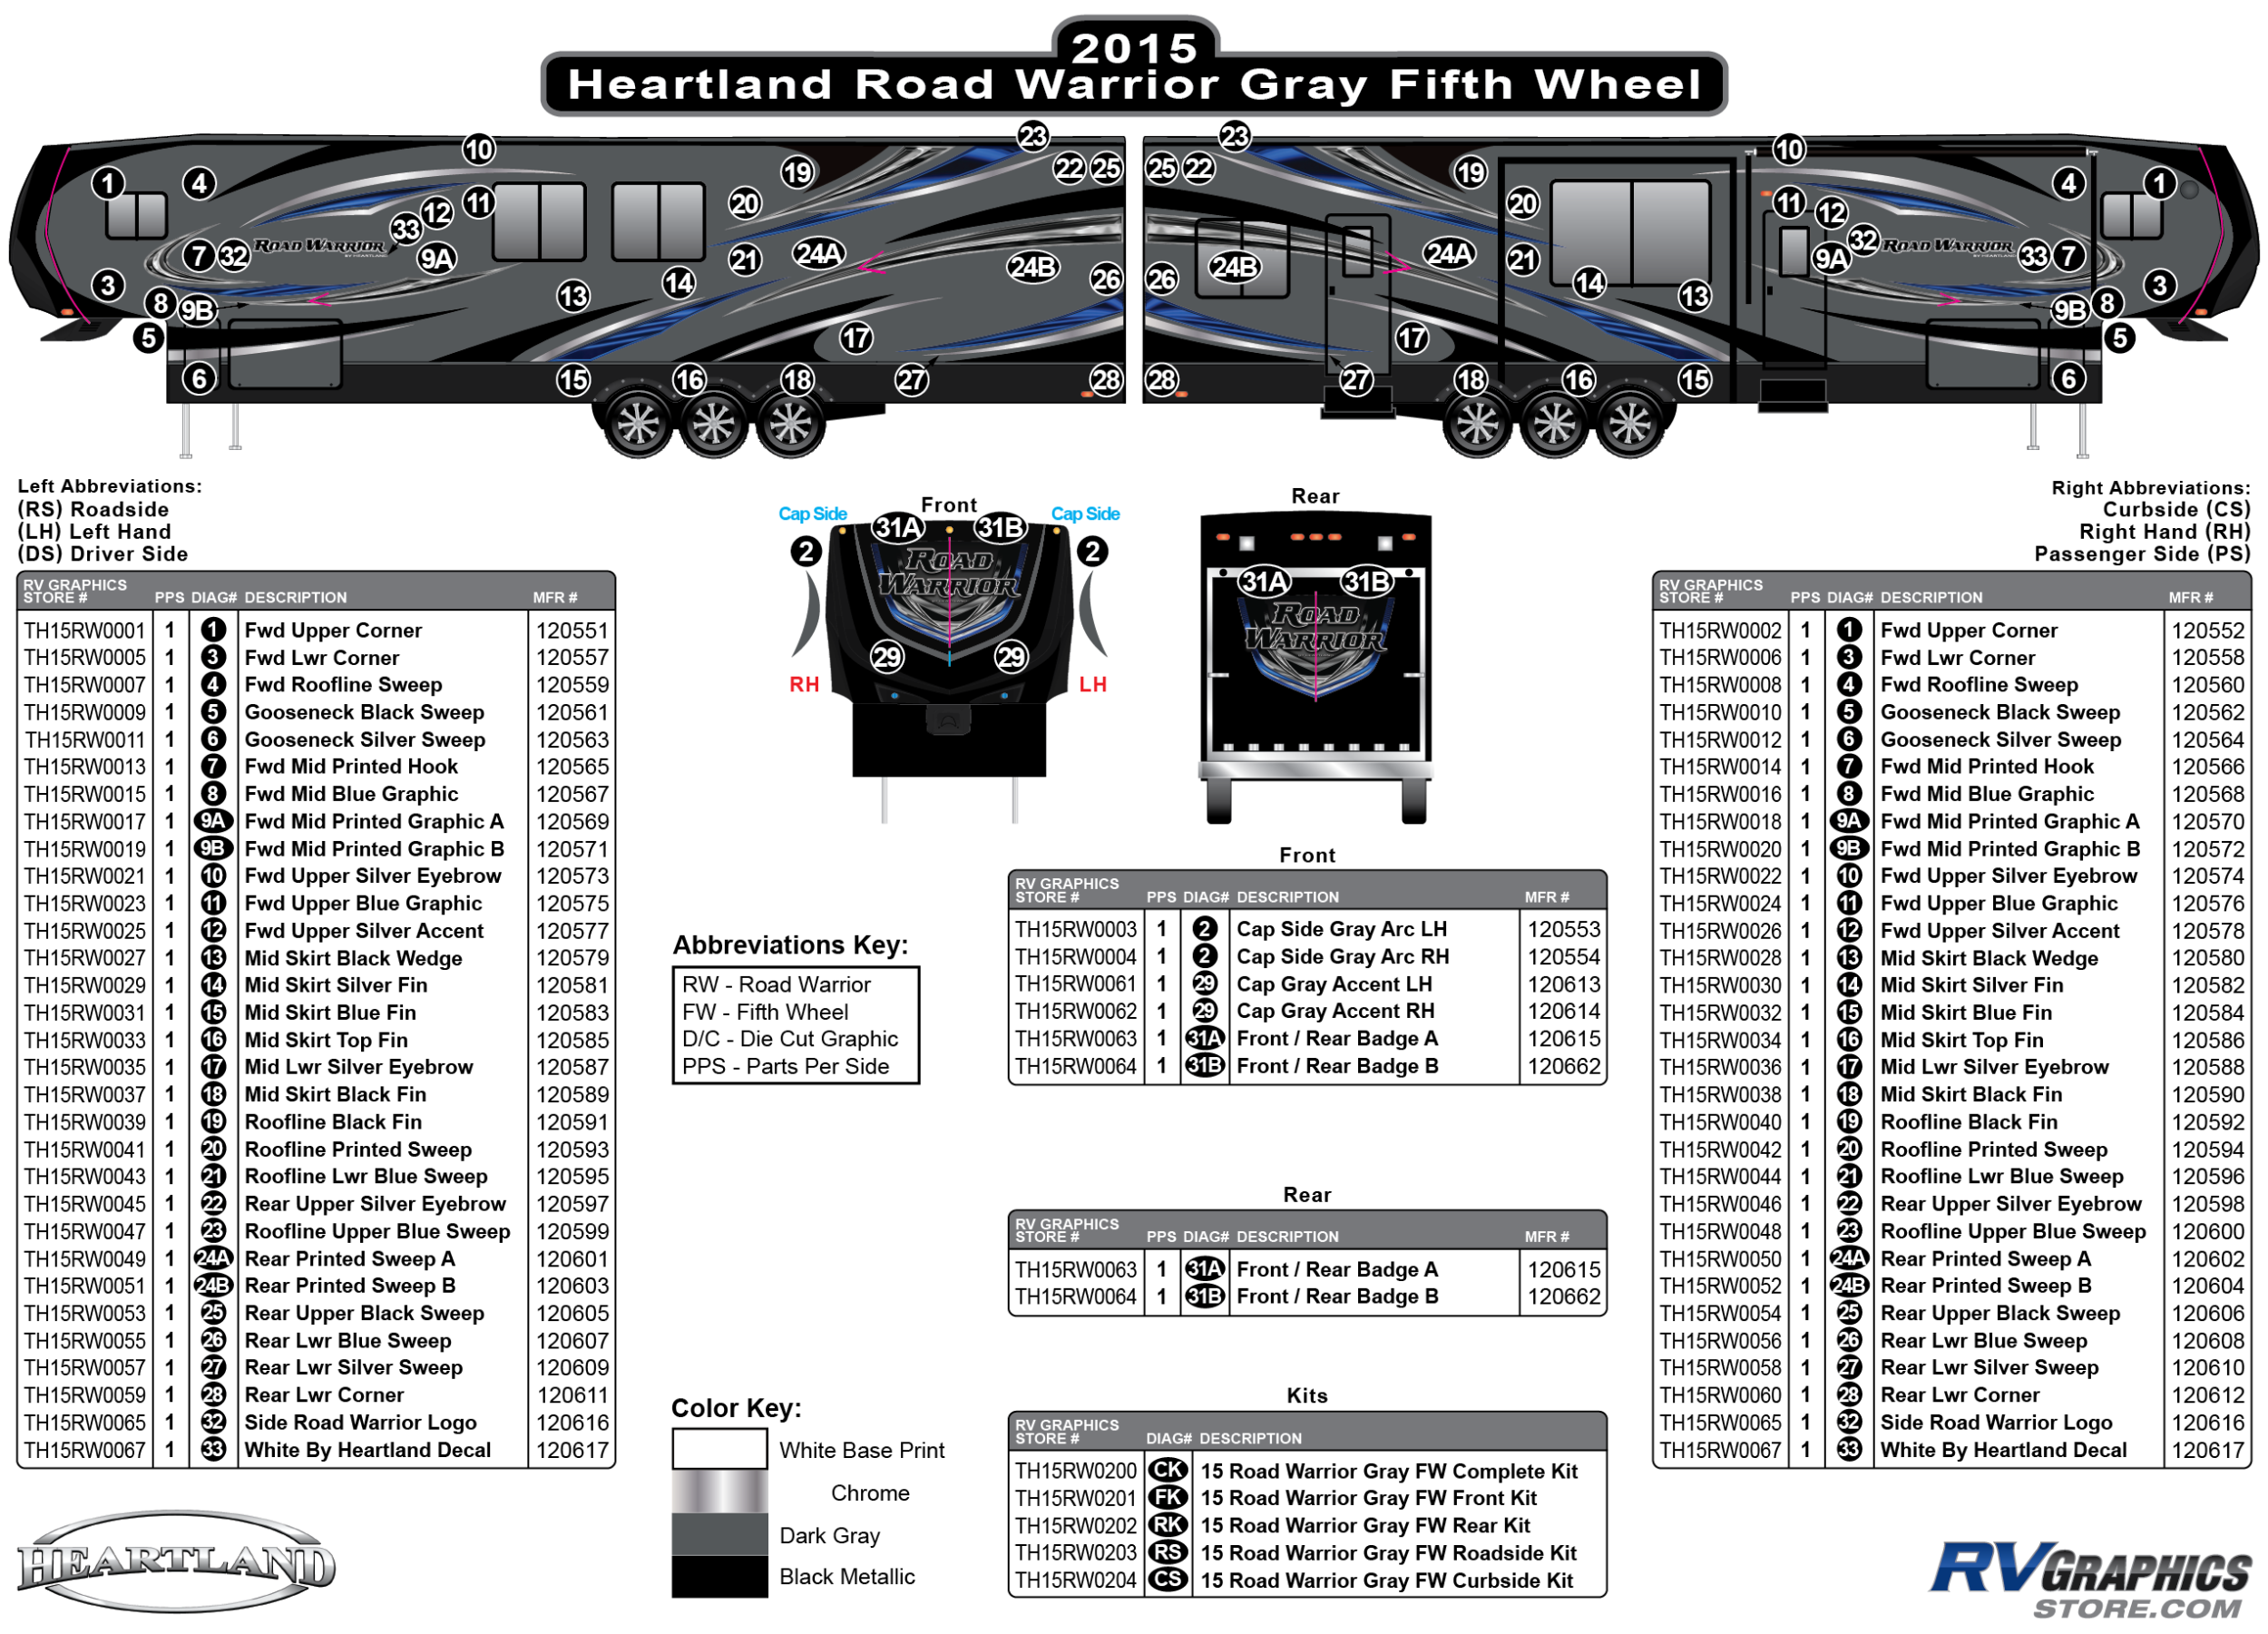 Road Warrior - 2015 Road Warrior FW-Fifth Wheel Gray Sidewall